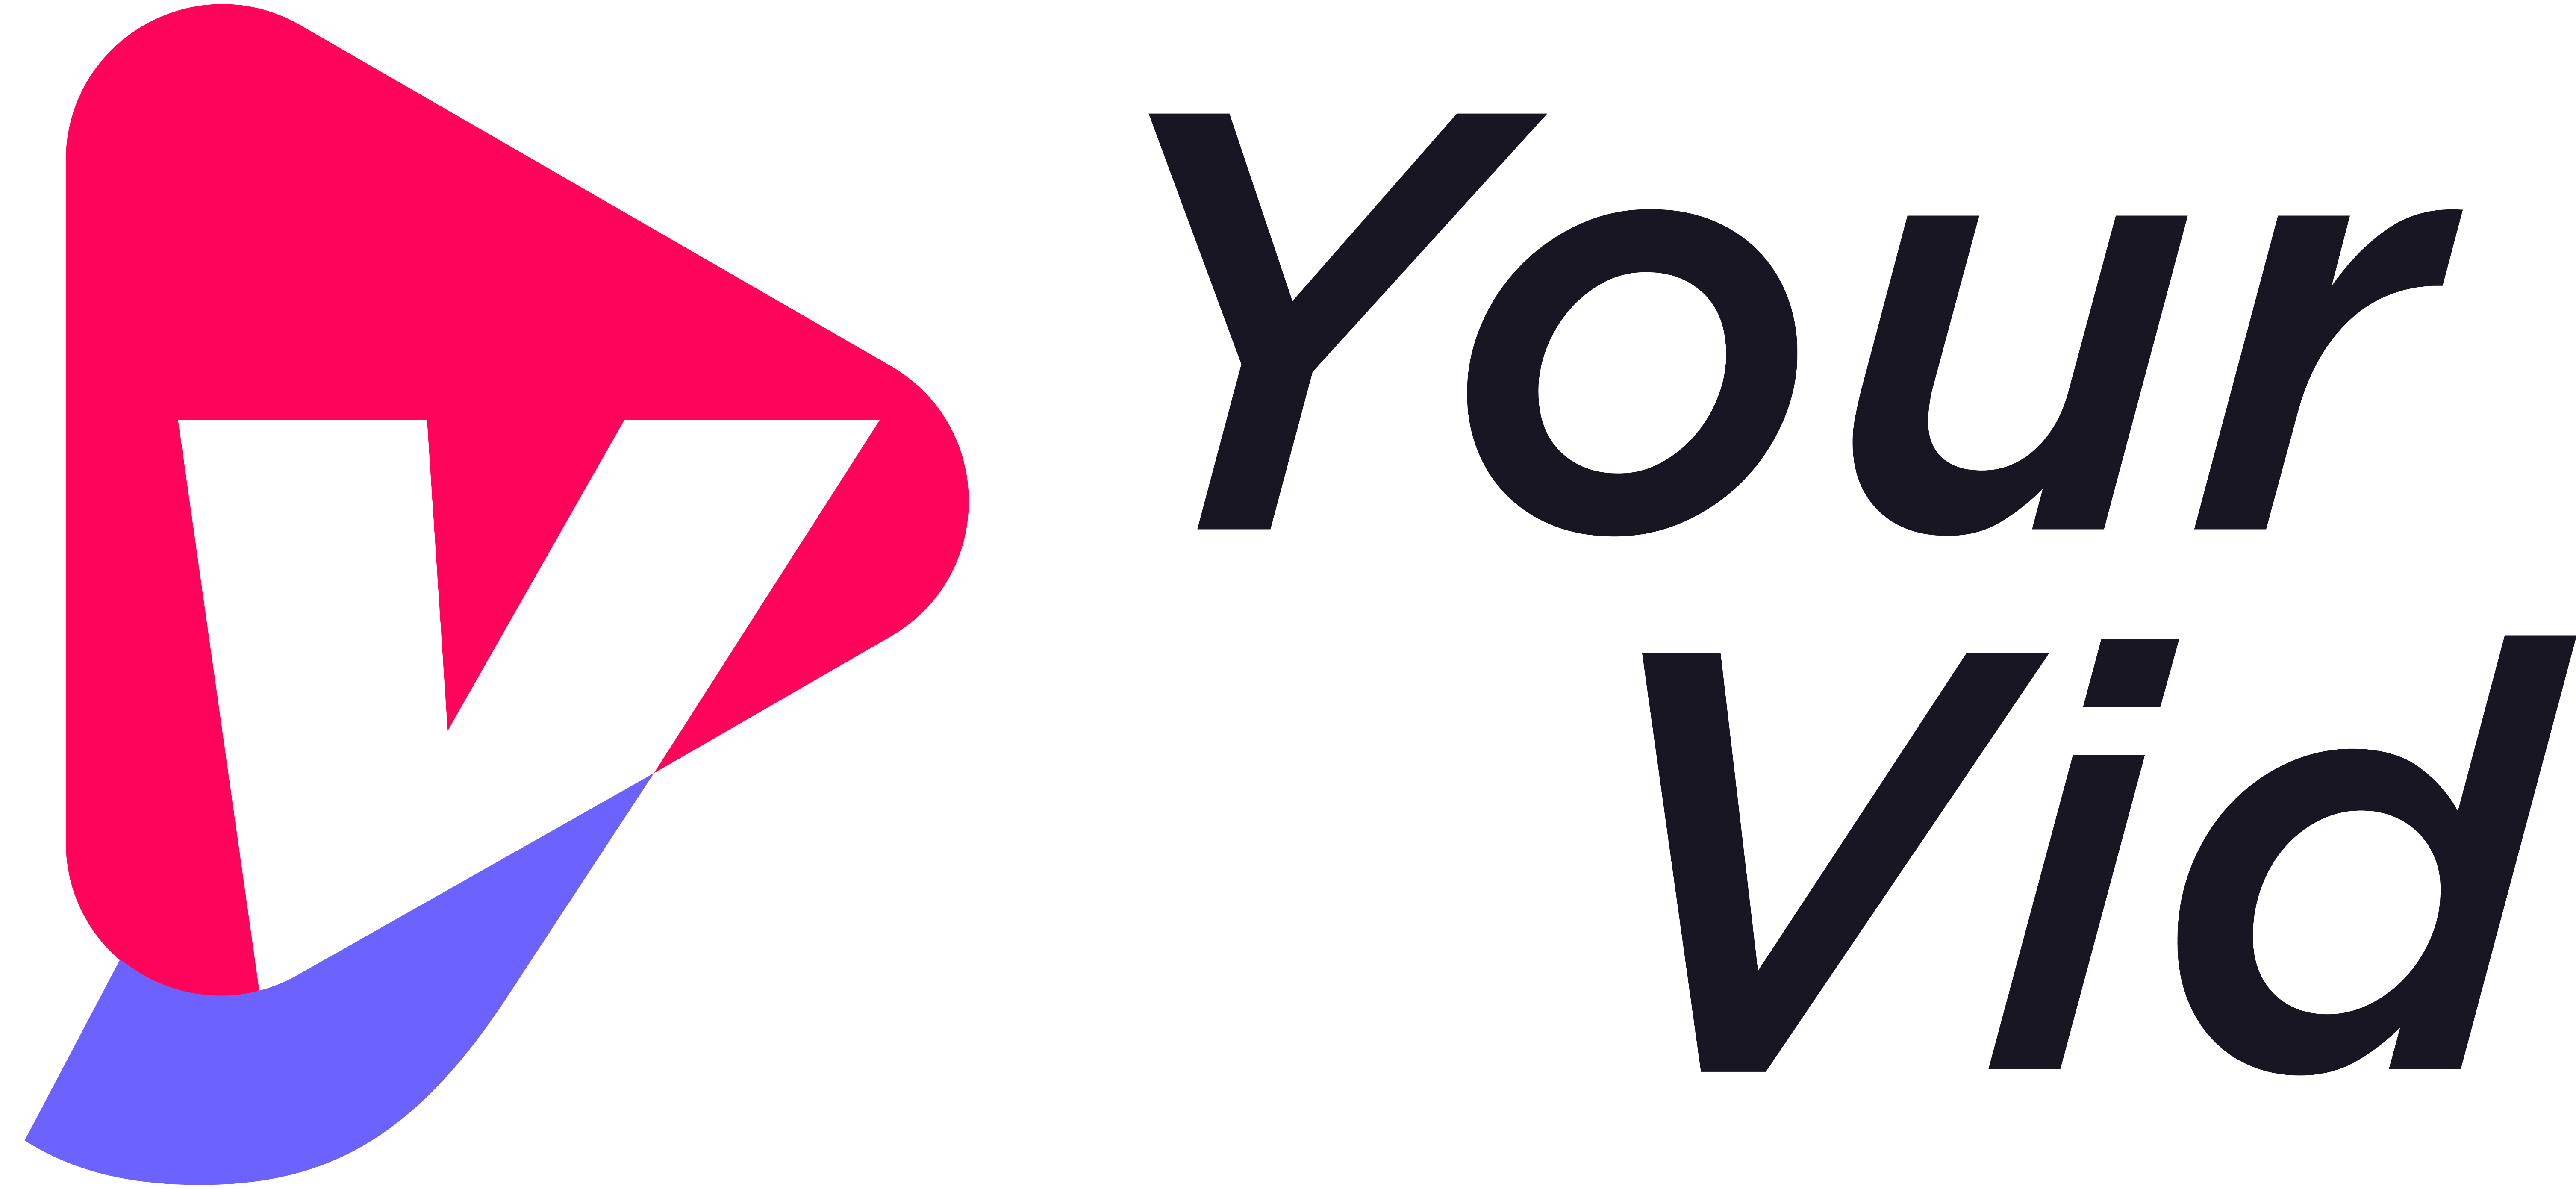 YourVid - Logo Export_Zeichenfläche9-09.png